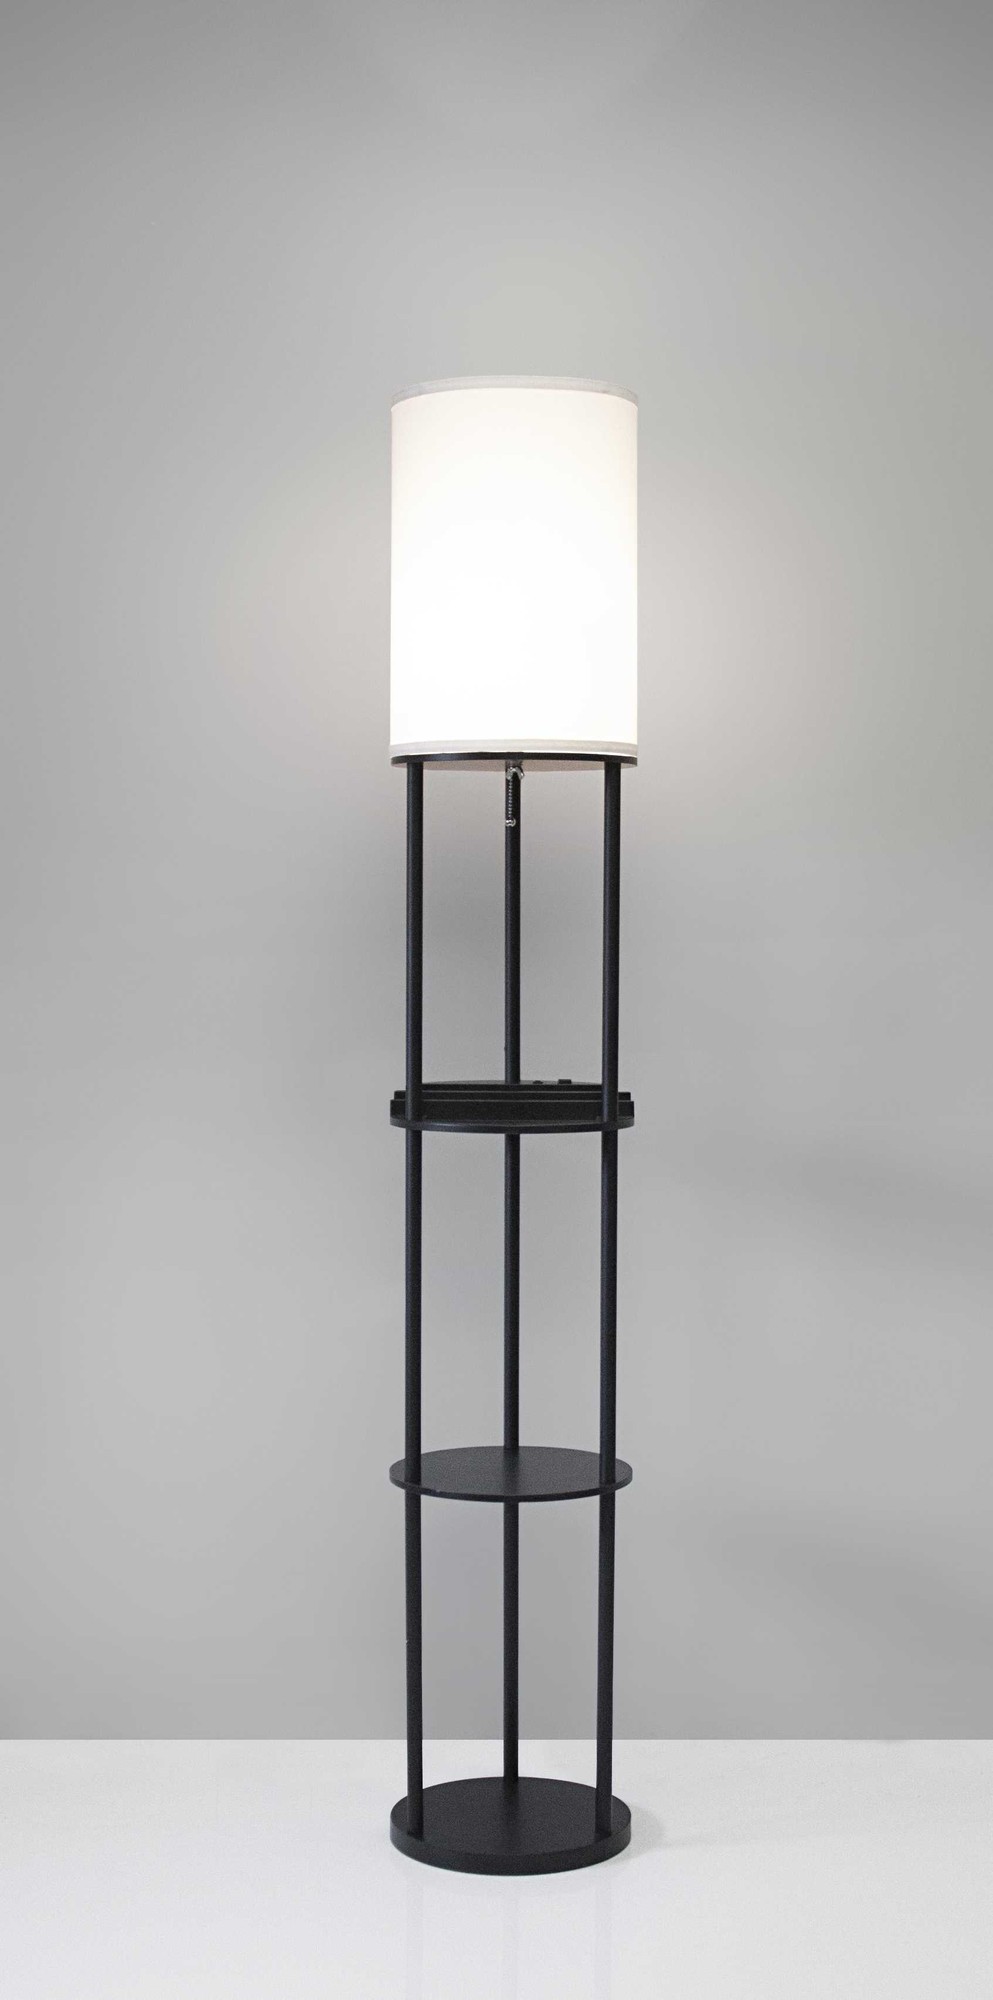 11" X 11" X 66.5" Black Wood Station Shelf Floor Lamp